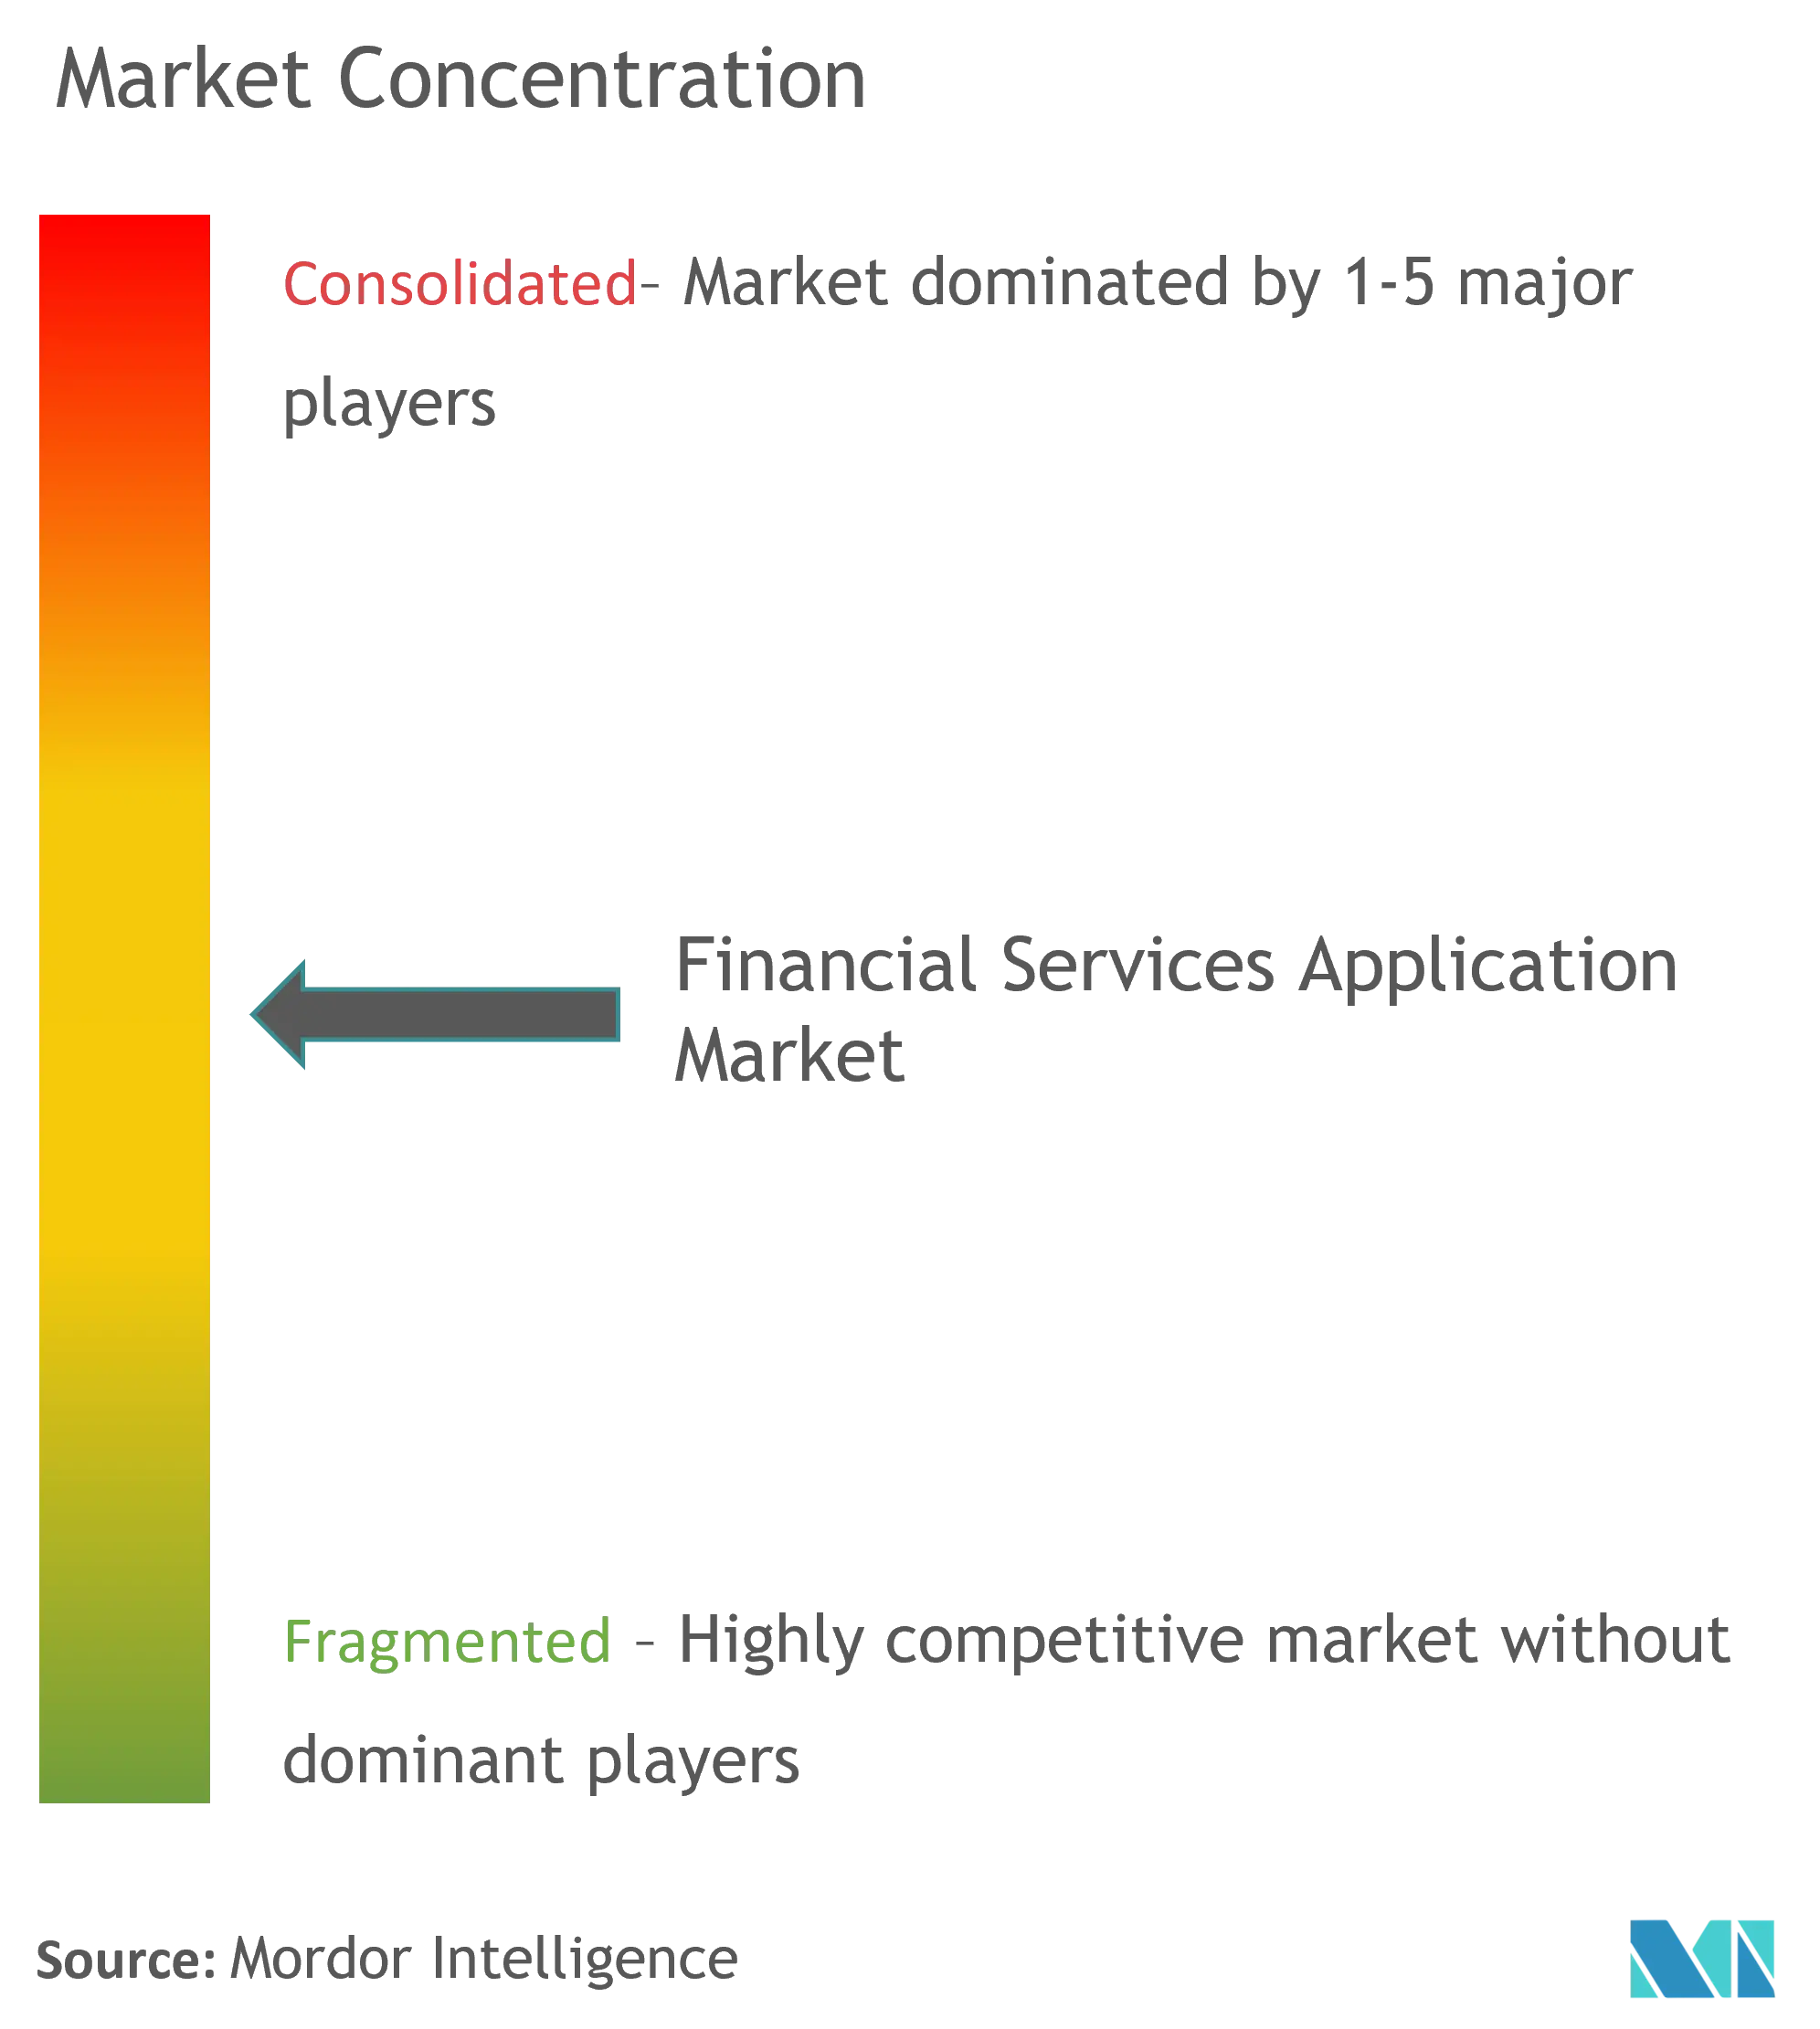 Financial Services Application Market Concentration